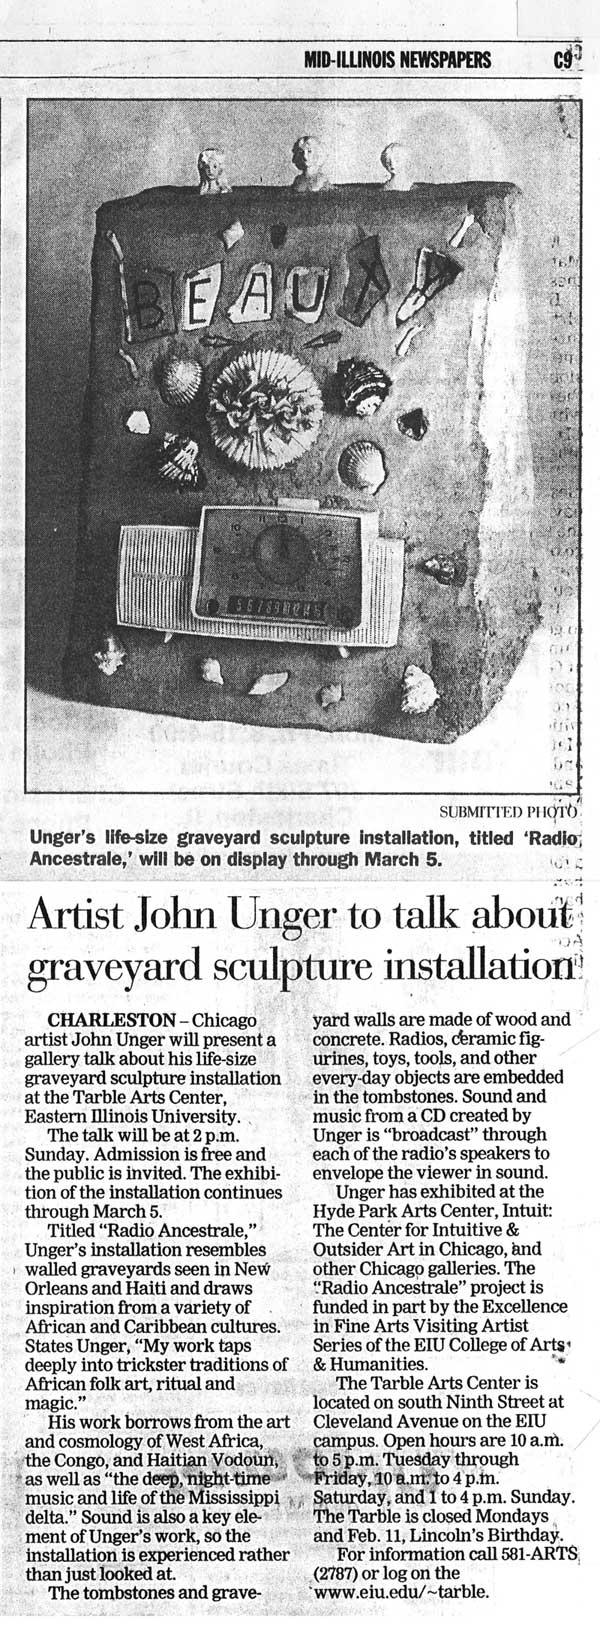 “Artist John Unger to Talk About Graveyard Sculpture Installation,” Charleston Times-Courier, Charleston, IL, February 12, 2000, C9.